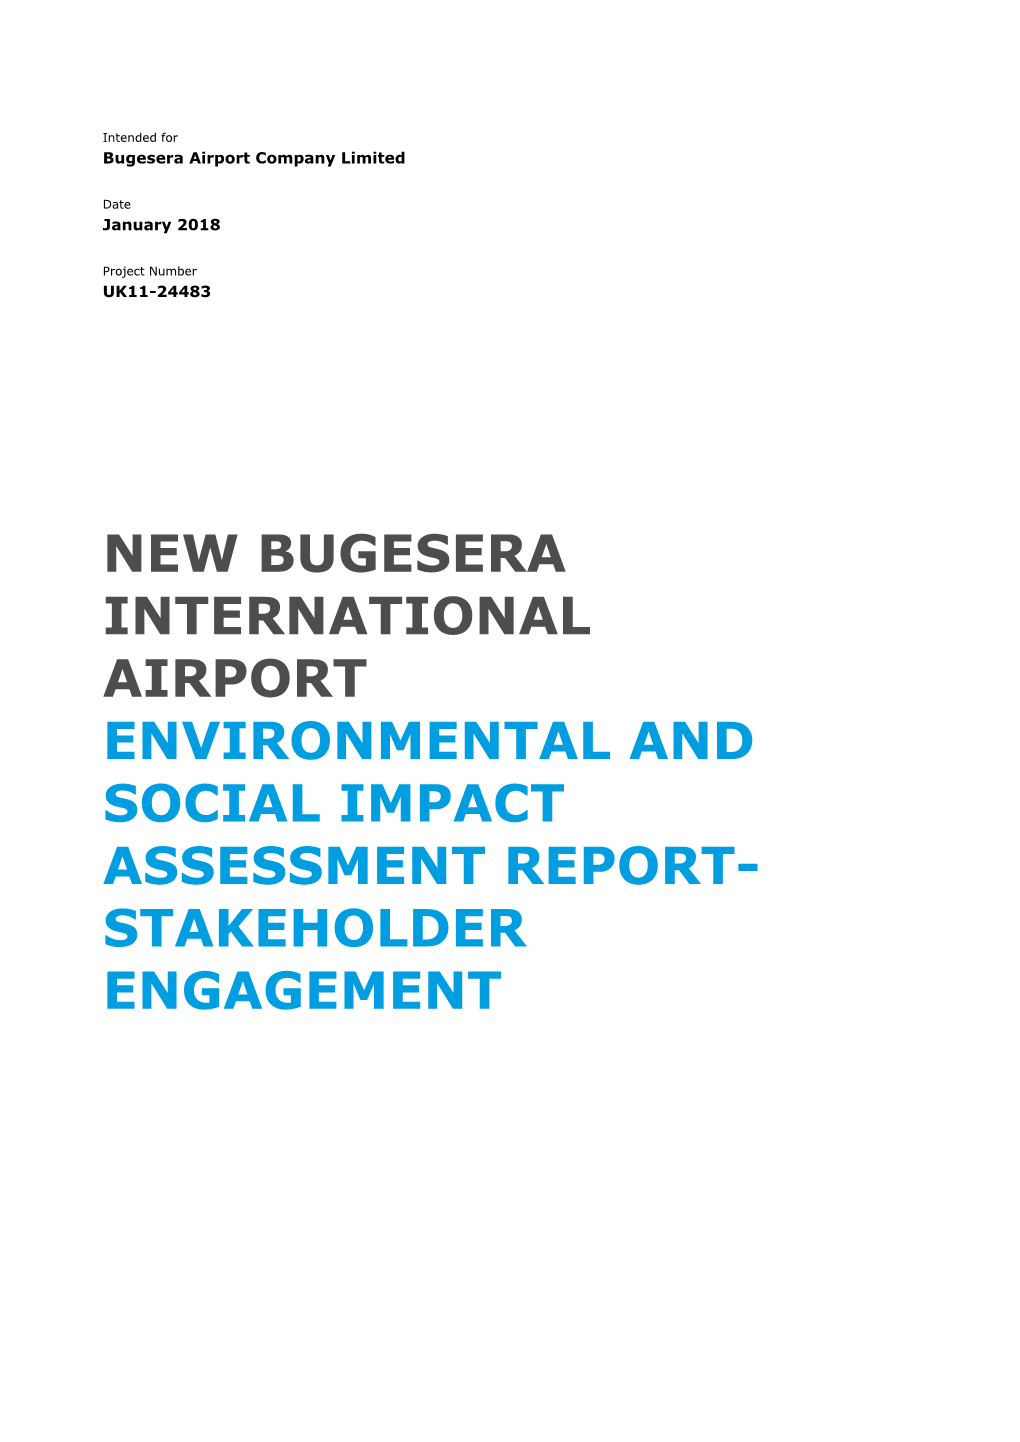 New Bugesera International Airport Environmental and Social Impact Assessment Report